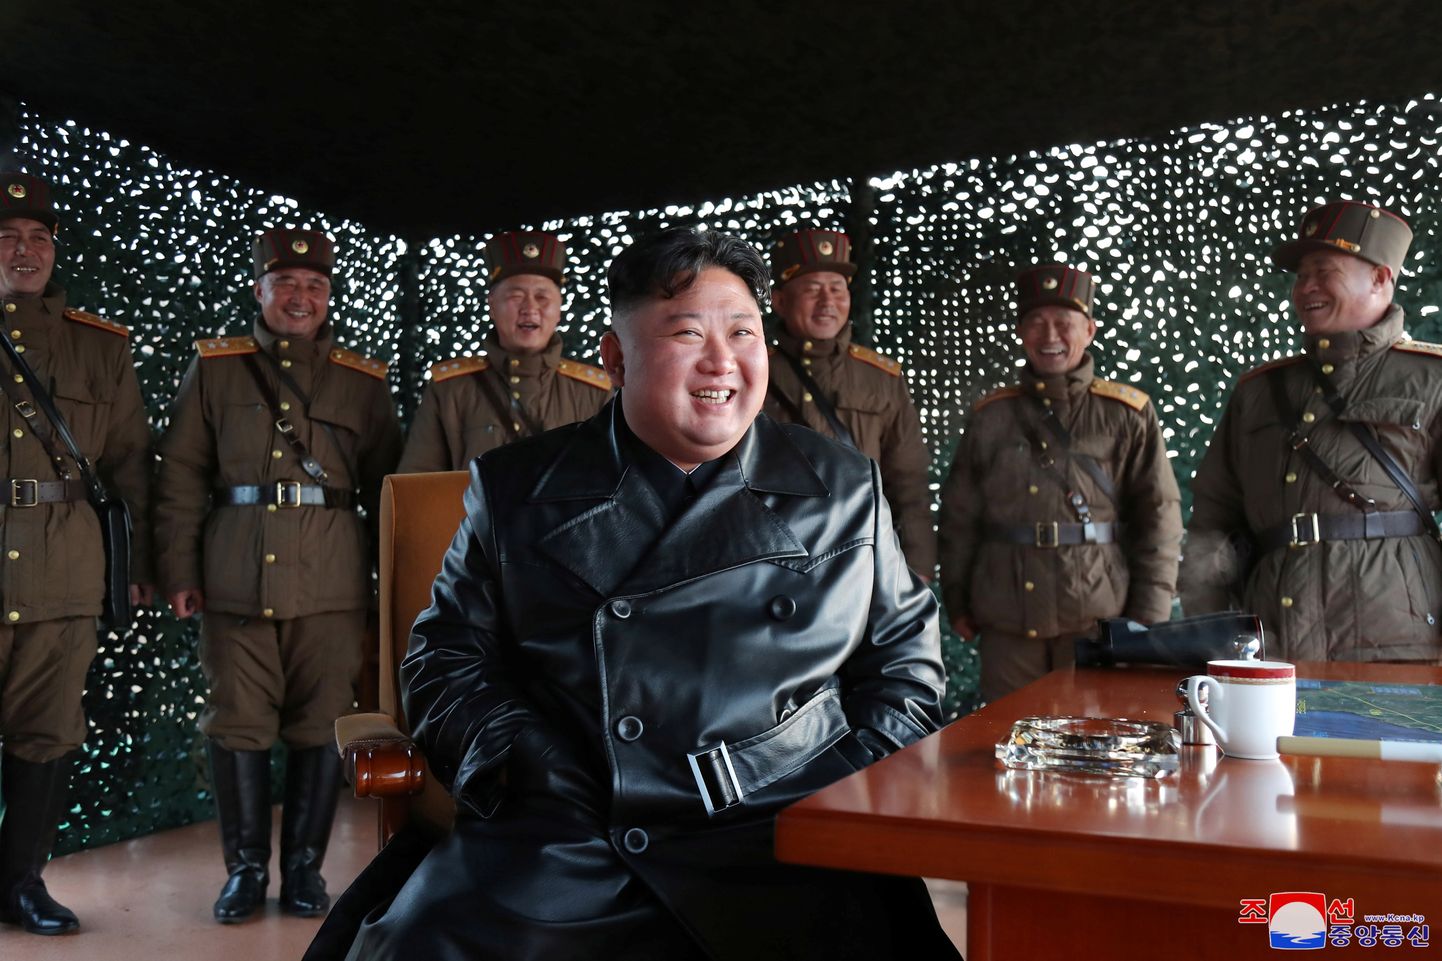 Põhja-Korea liider Kim Jong-un jälgimas raketikatsetust.